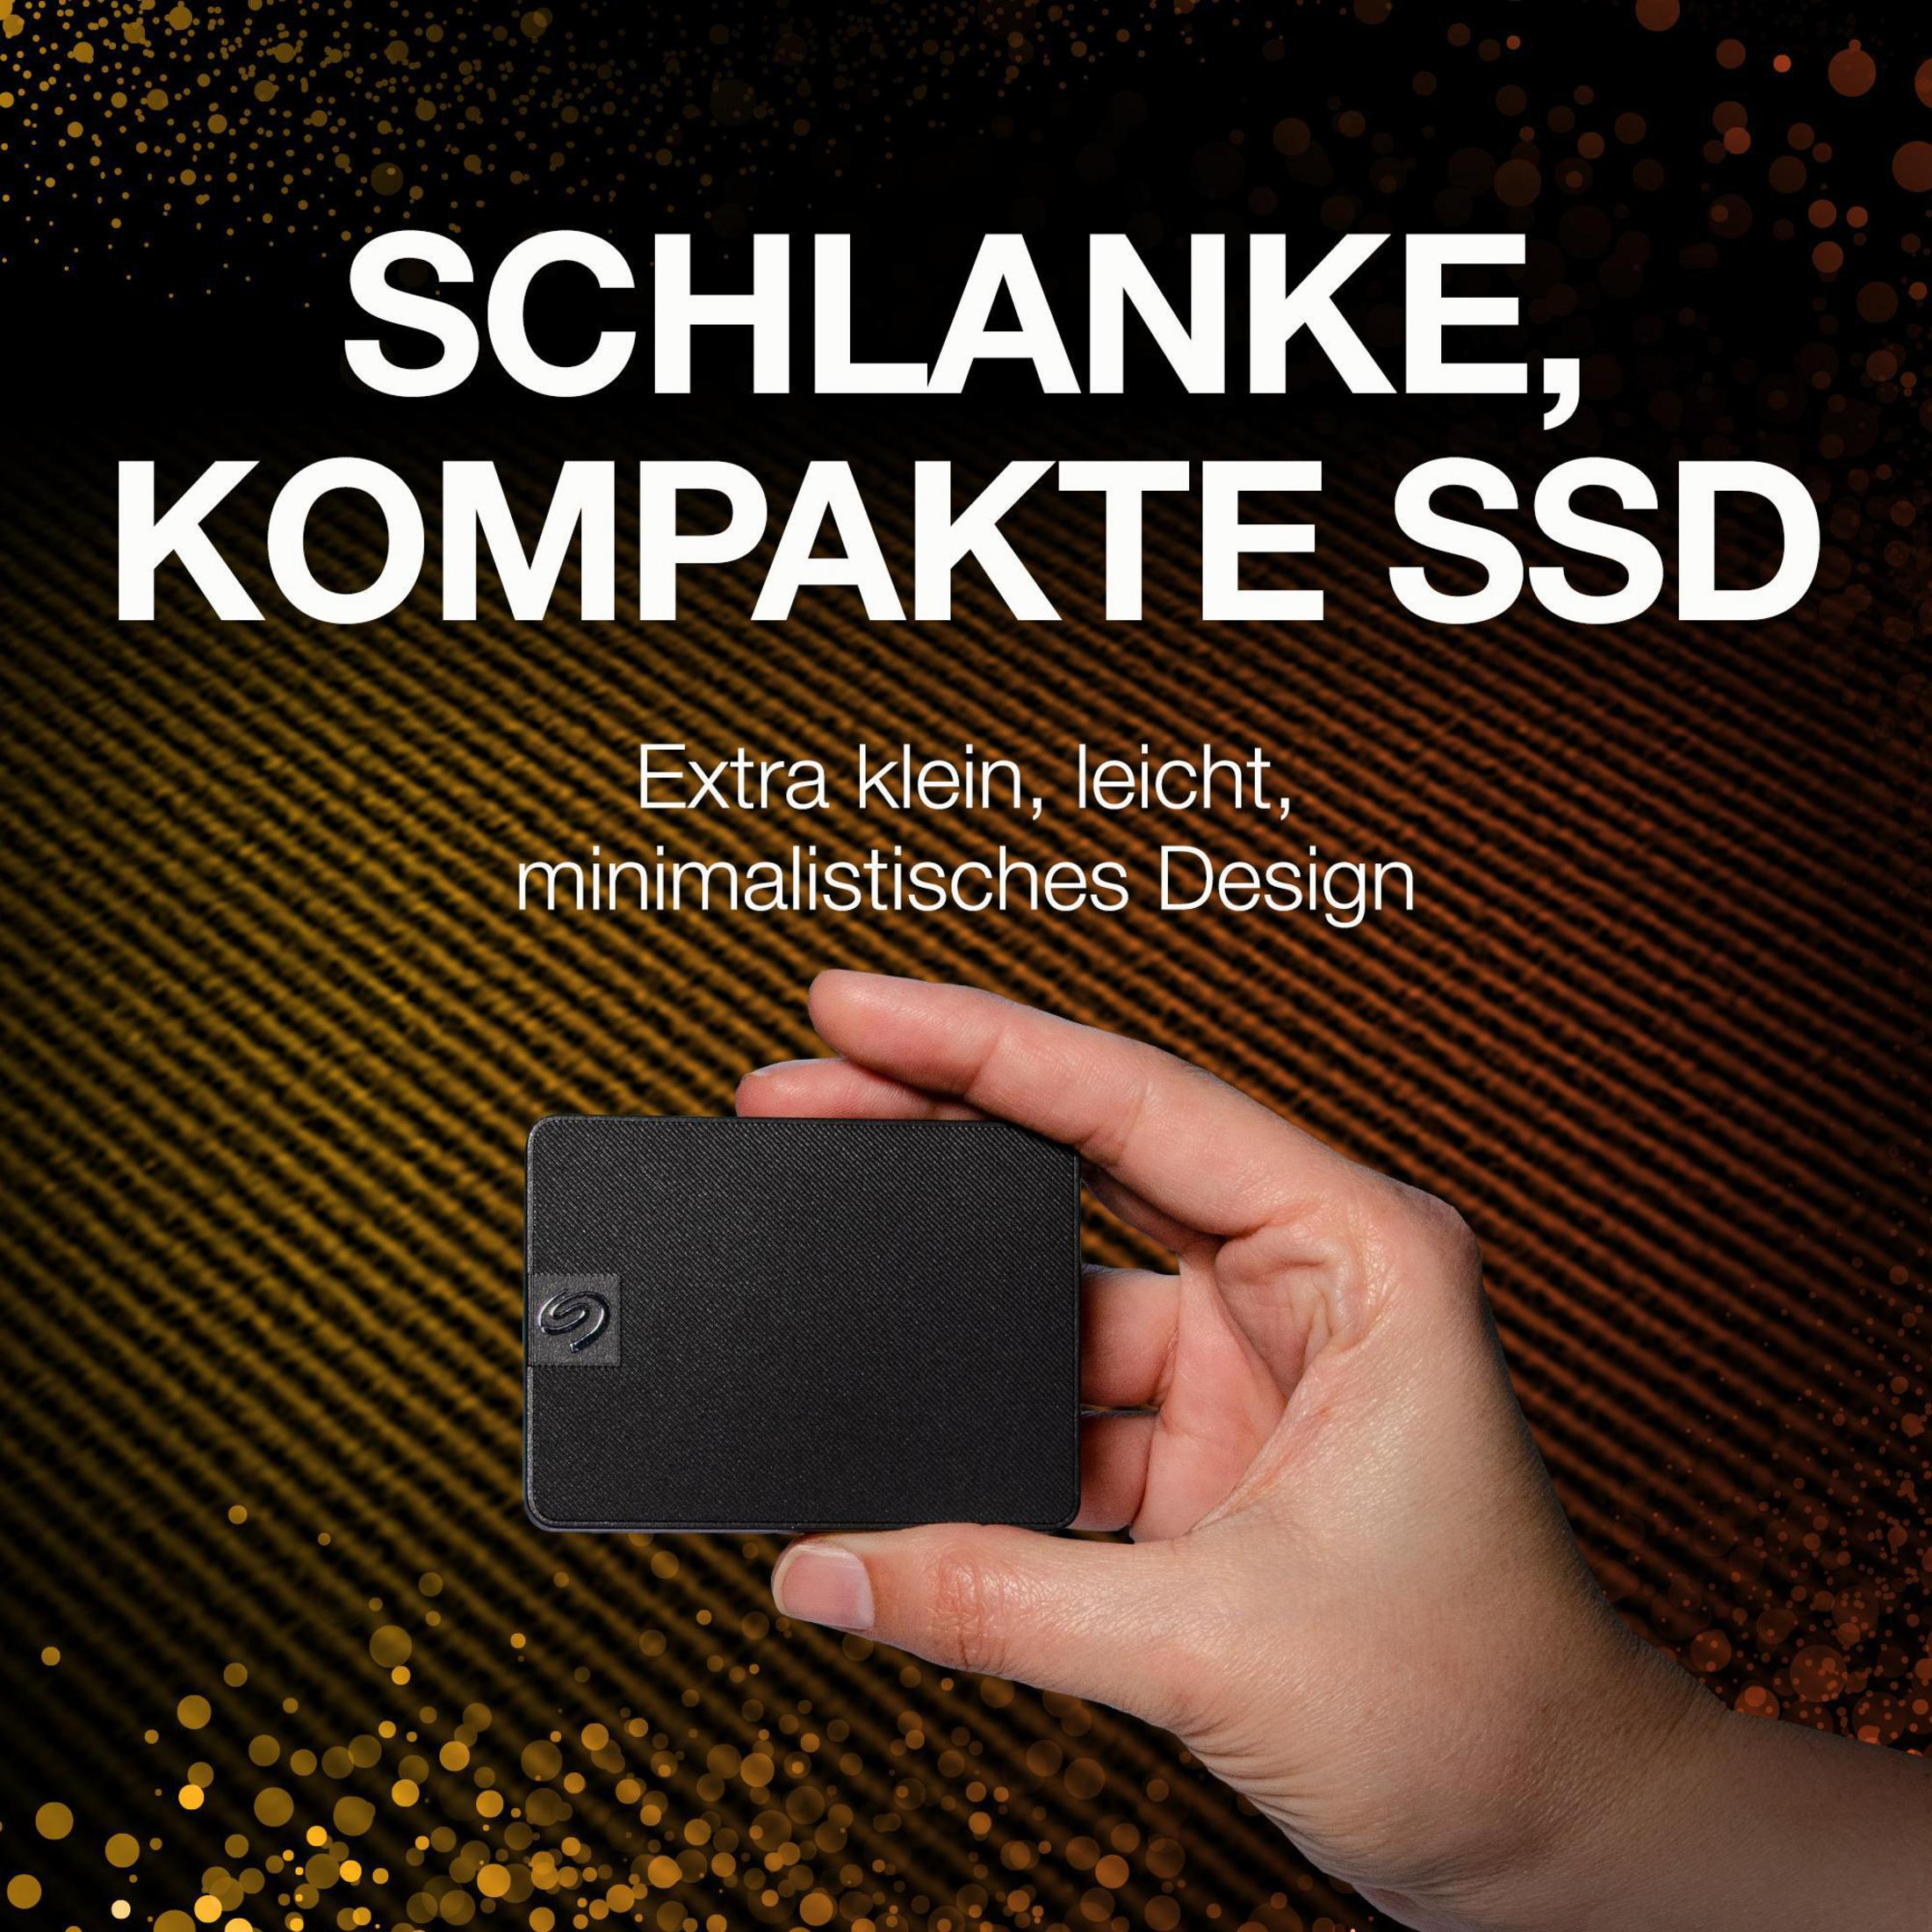 EXPANSION Schwarz 500GB SSD GB SEAGATE SSD, BLACK, STJD500400 extern, 500